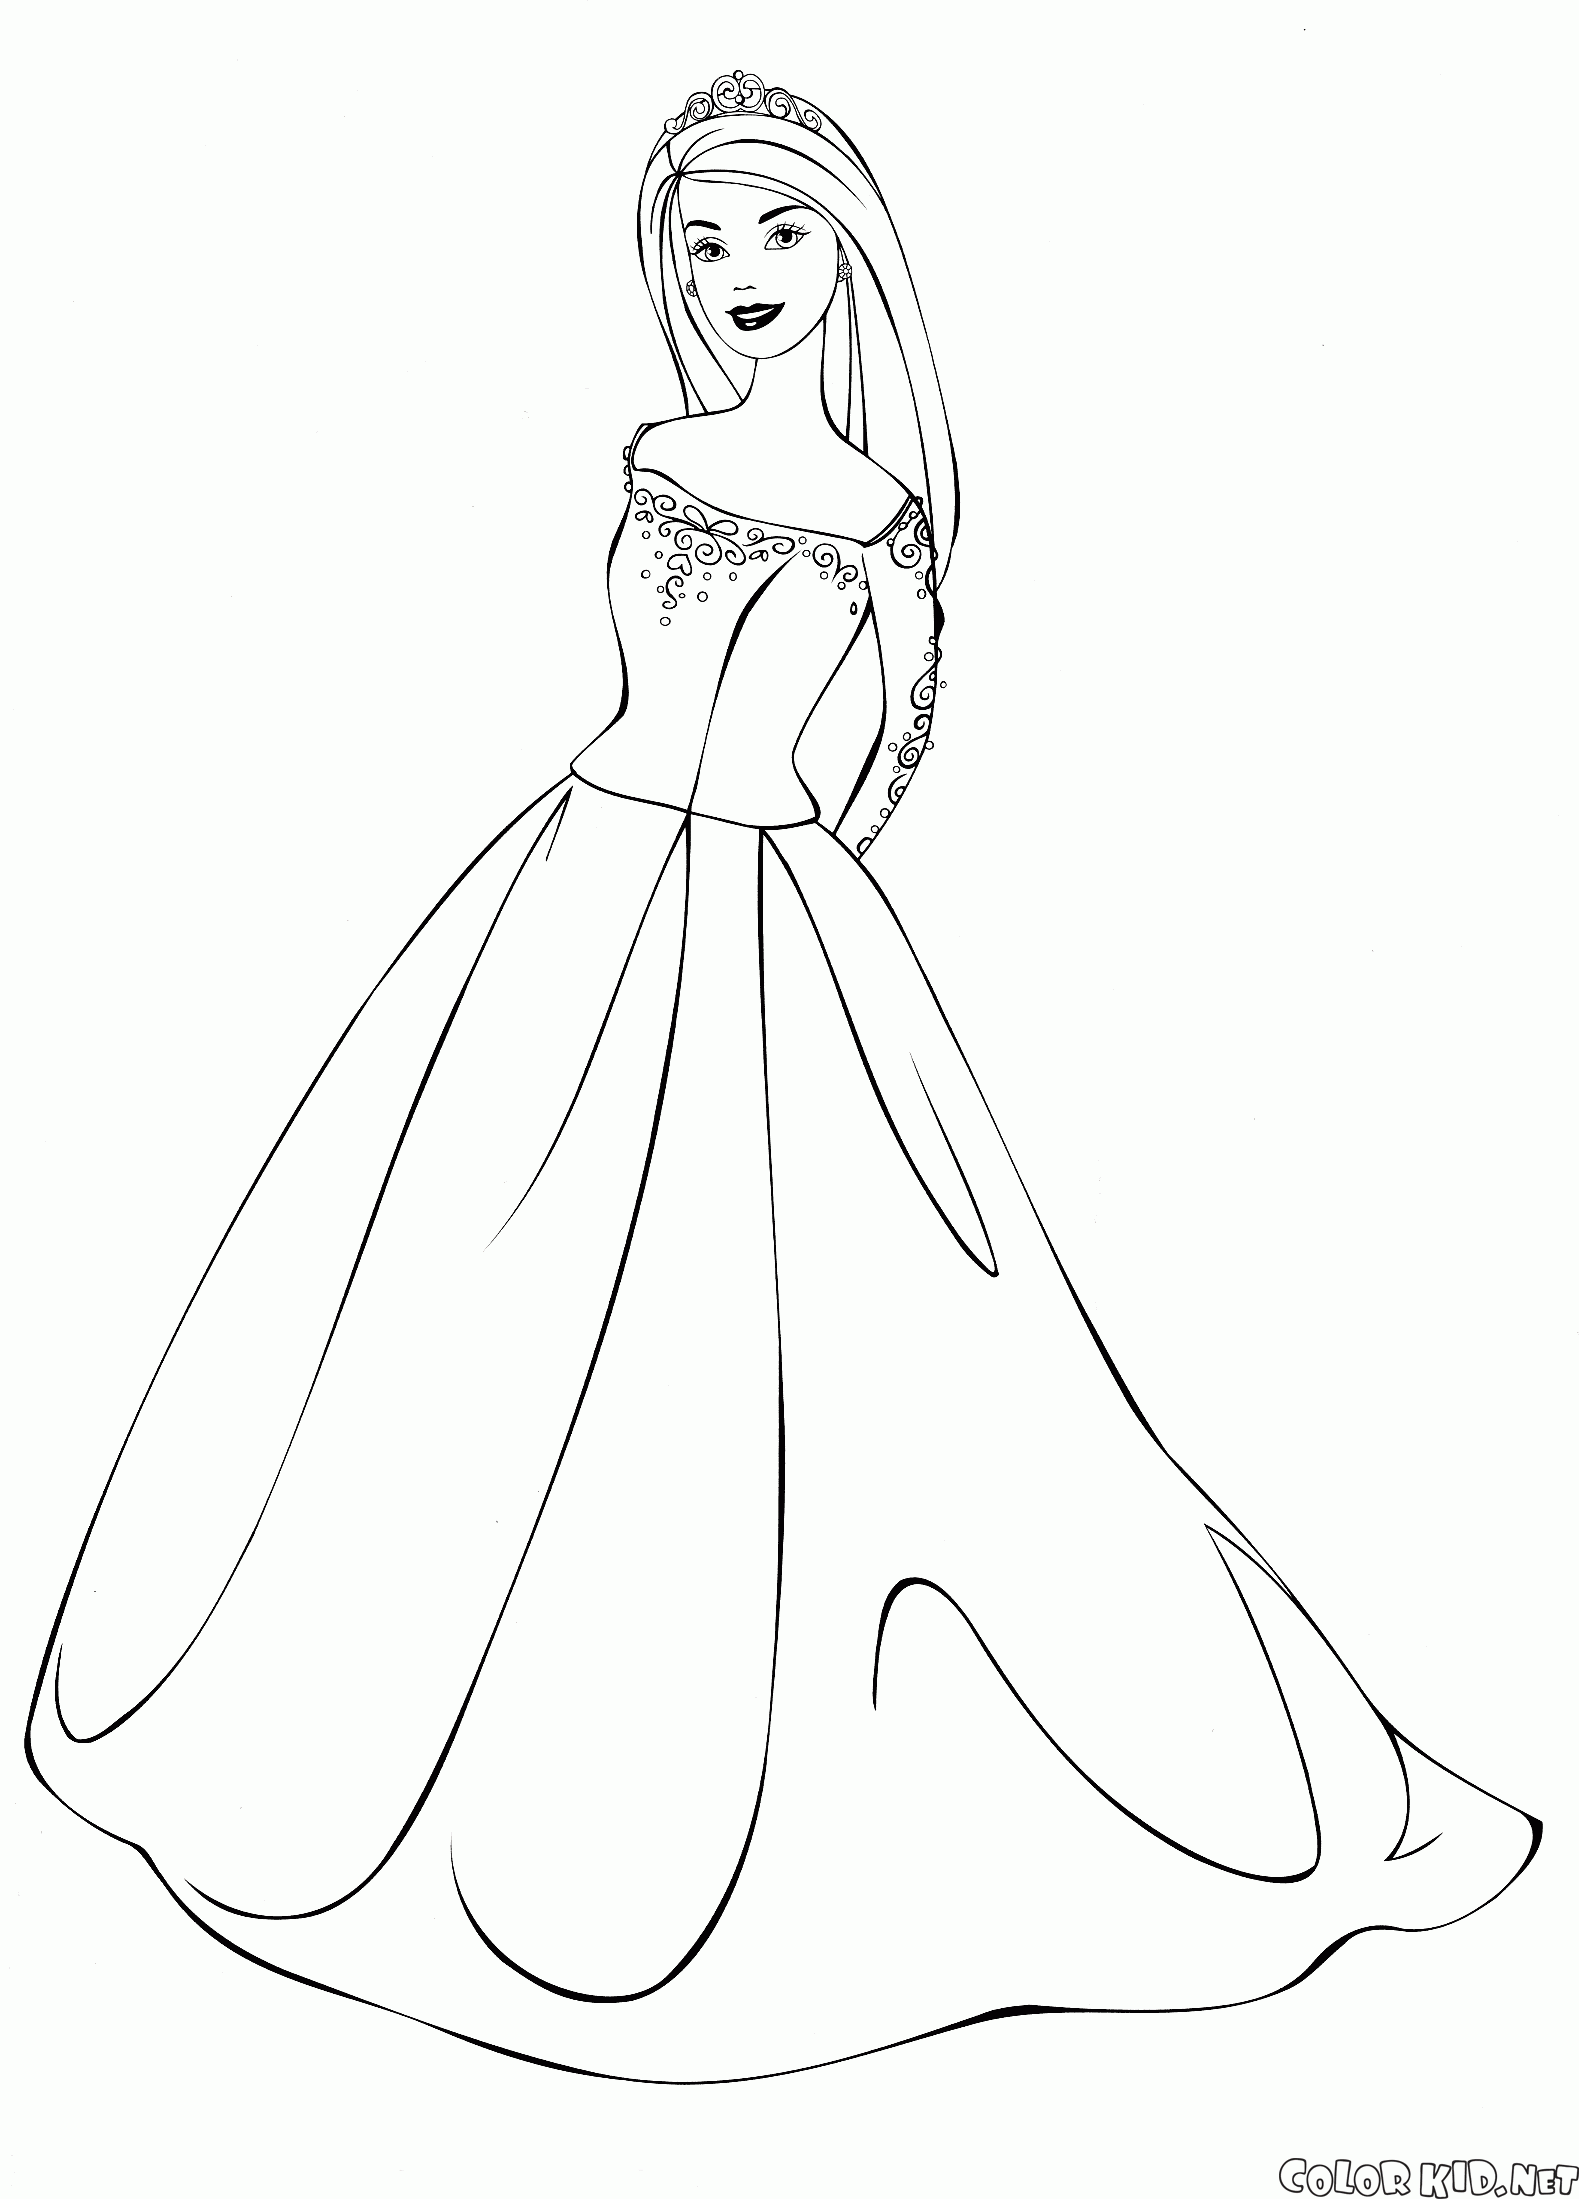 Barbie in a wedding dress